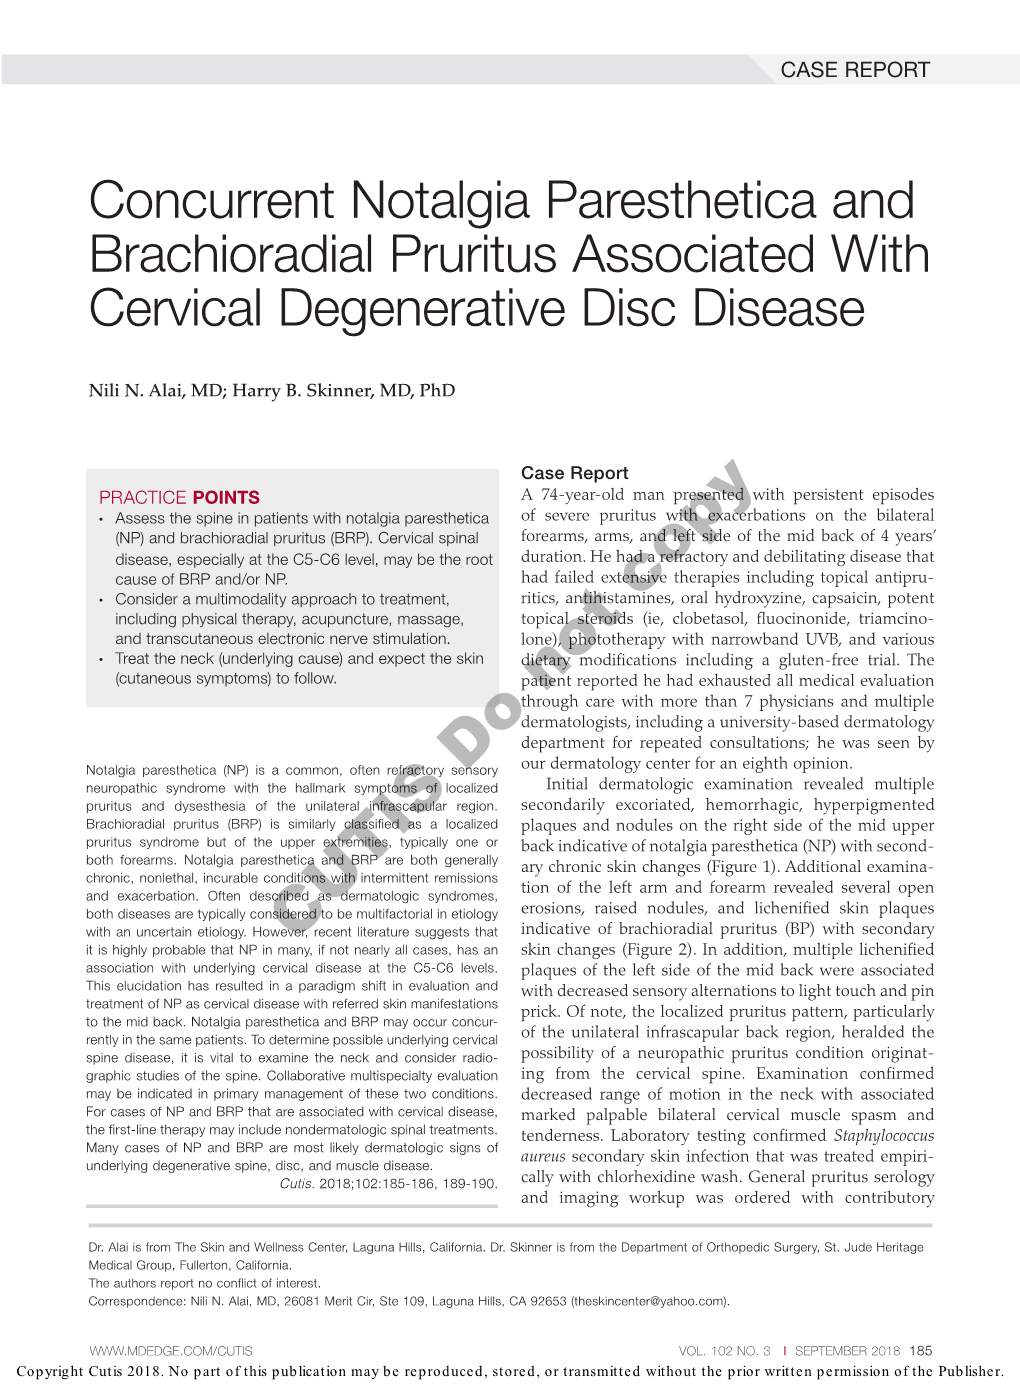 Concurrent Notalgia Paresthetica and Brachioradial Pruritus Associated with Cervical Degenerative Disc Disease